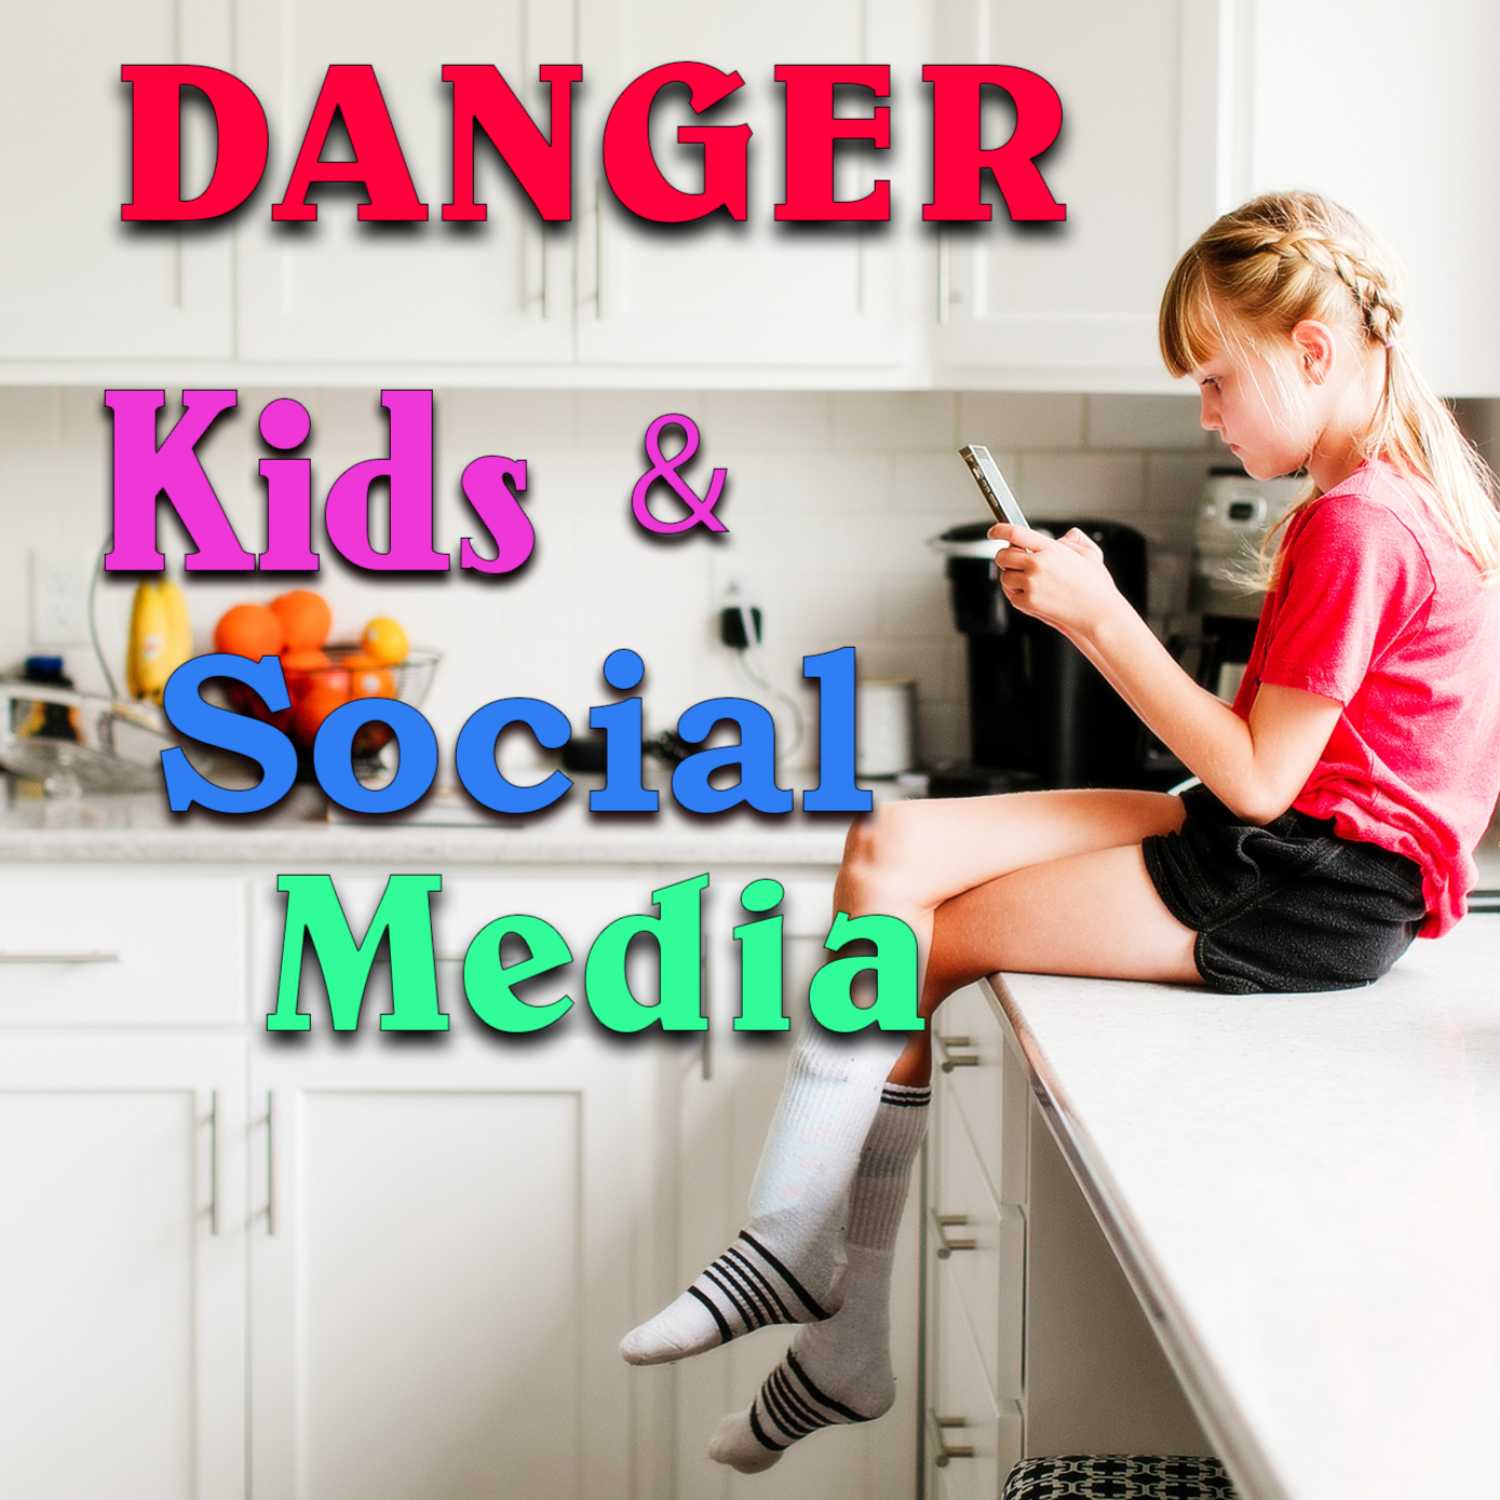 Teaching Kids how to be smart using Social Media